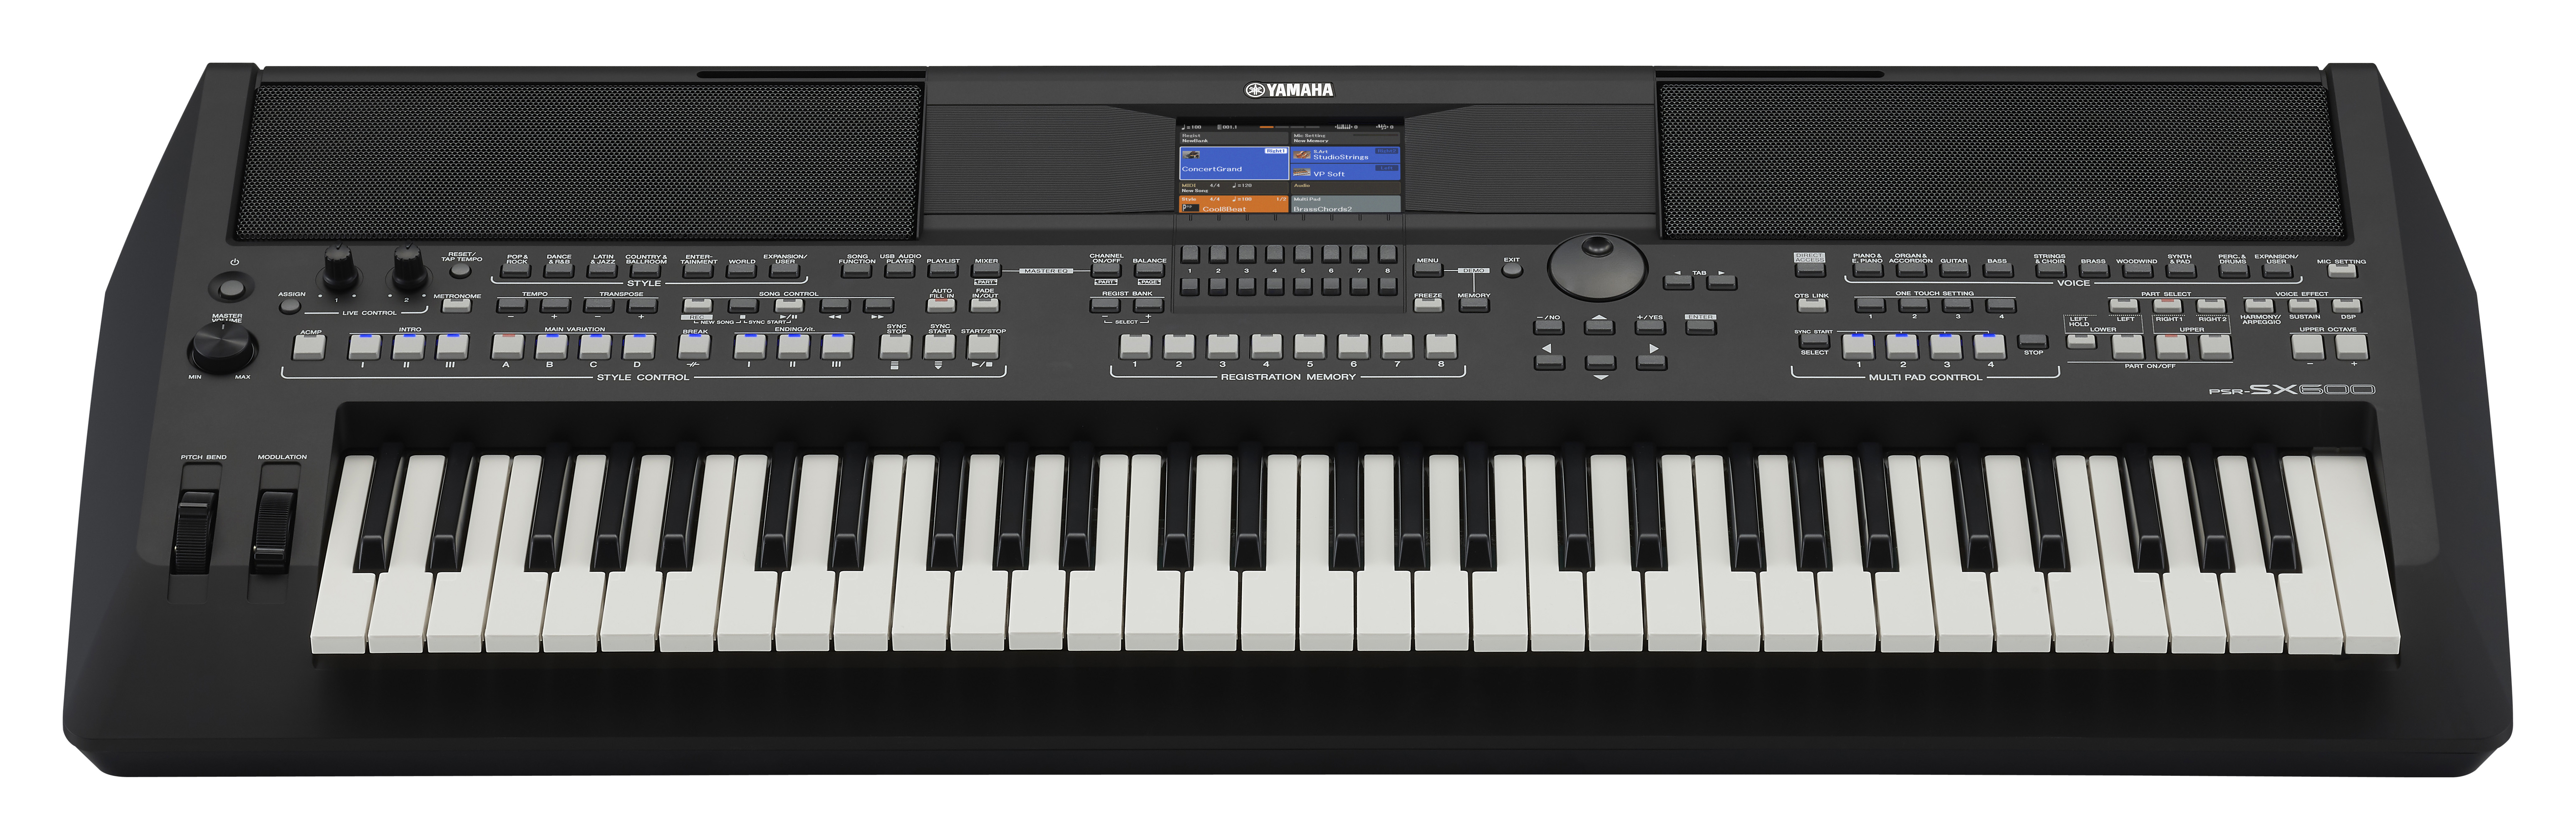 Yamaha Psr-sx600 - Entertainer Keyboard - Variation 1